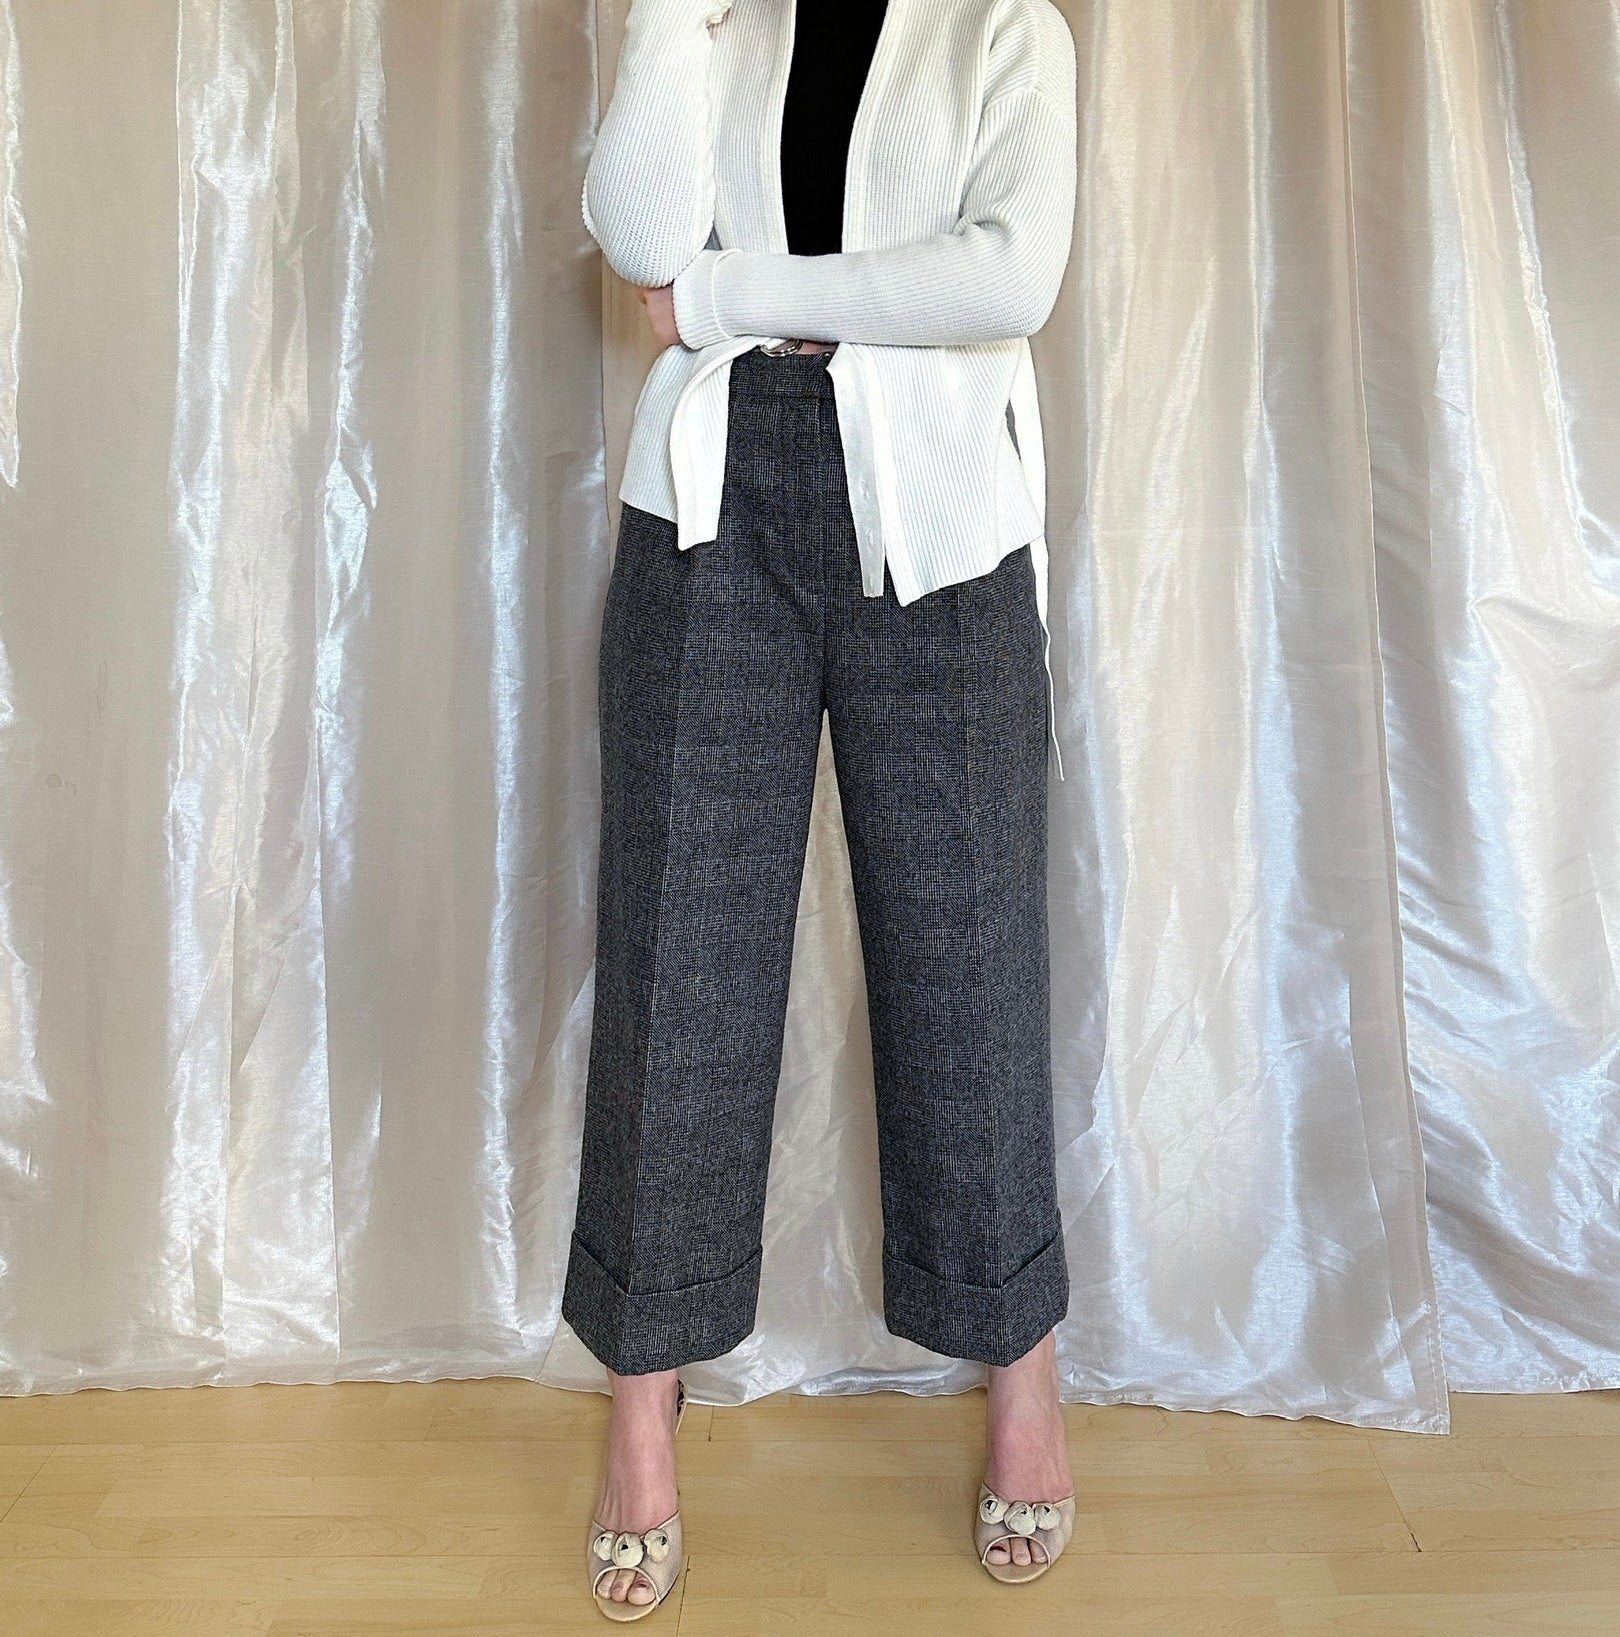 Oska Grey Polka Dot Crop Trouser Size 1 US size S